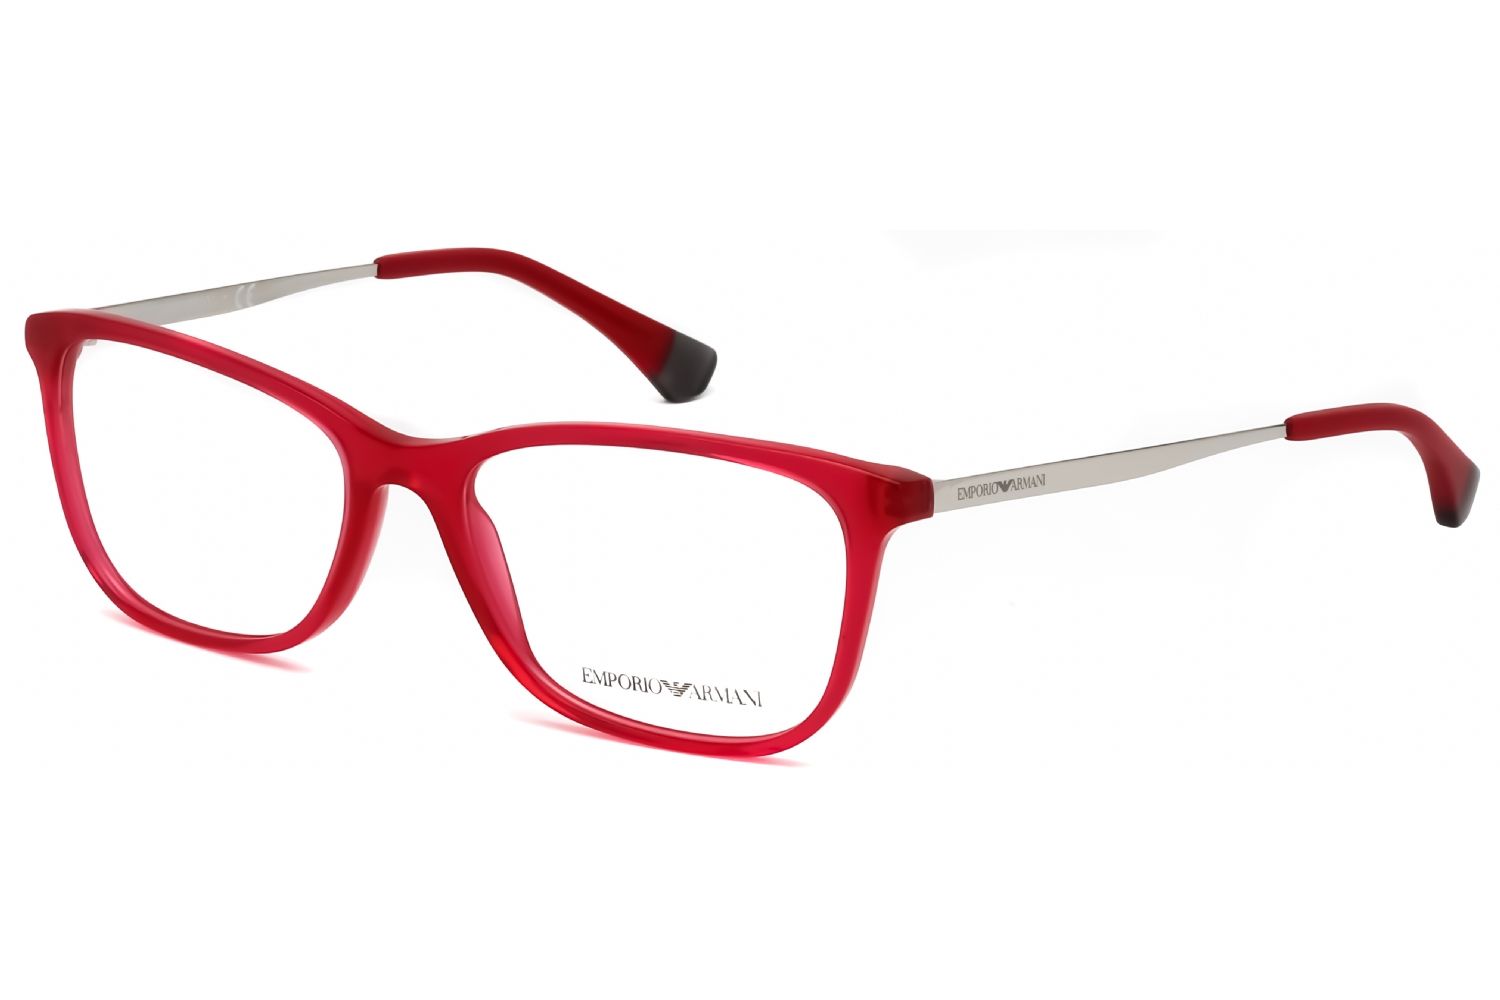 StyleName: Emporio Armani EA3119F Eyeglasses Red / Clear Lens Brand: Emporio Armani Frame Style: Rectangular Frame Material: plastic Color : Red / Clear Lens Men Eyeglasses